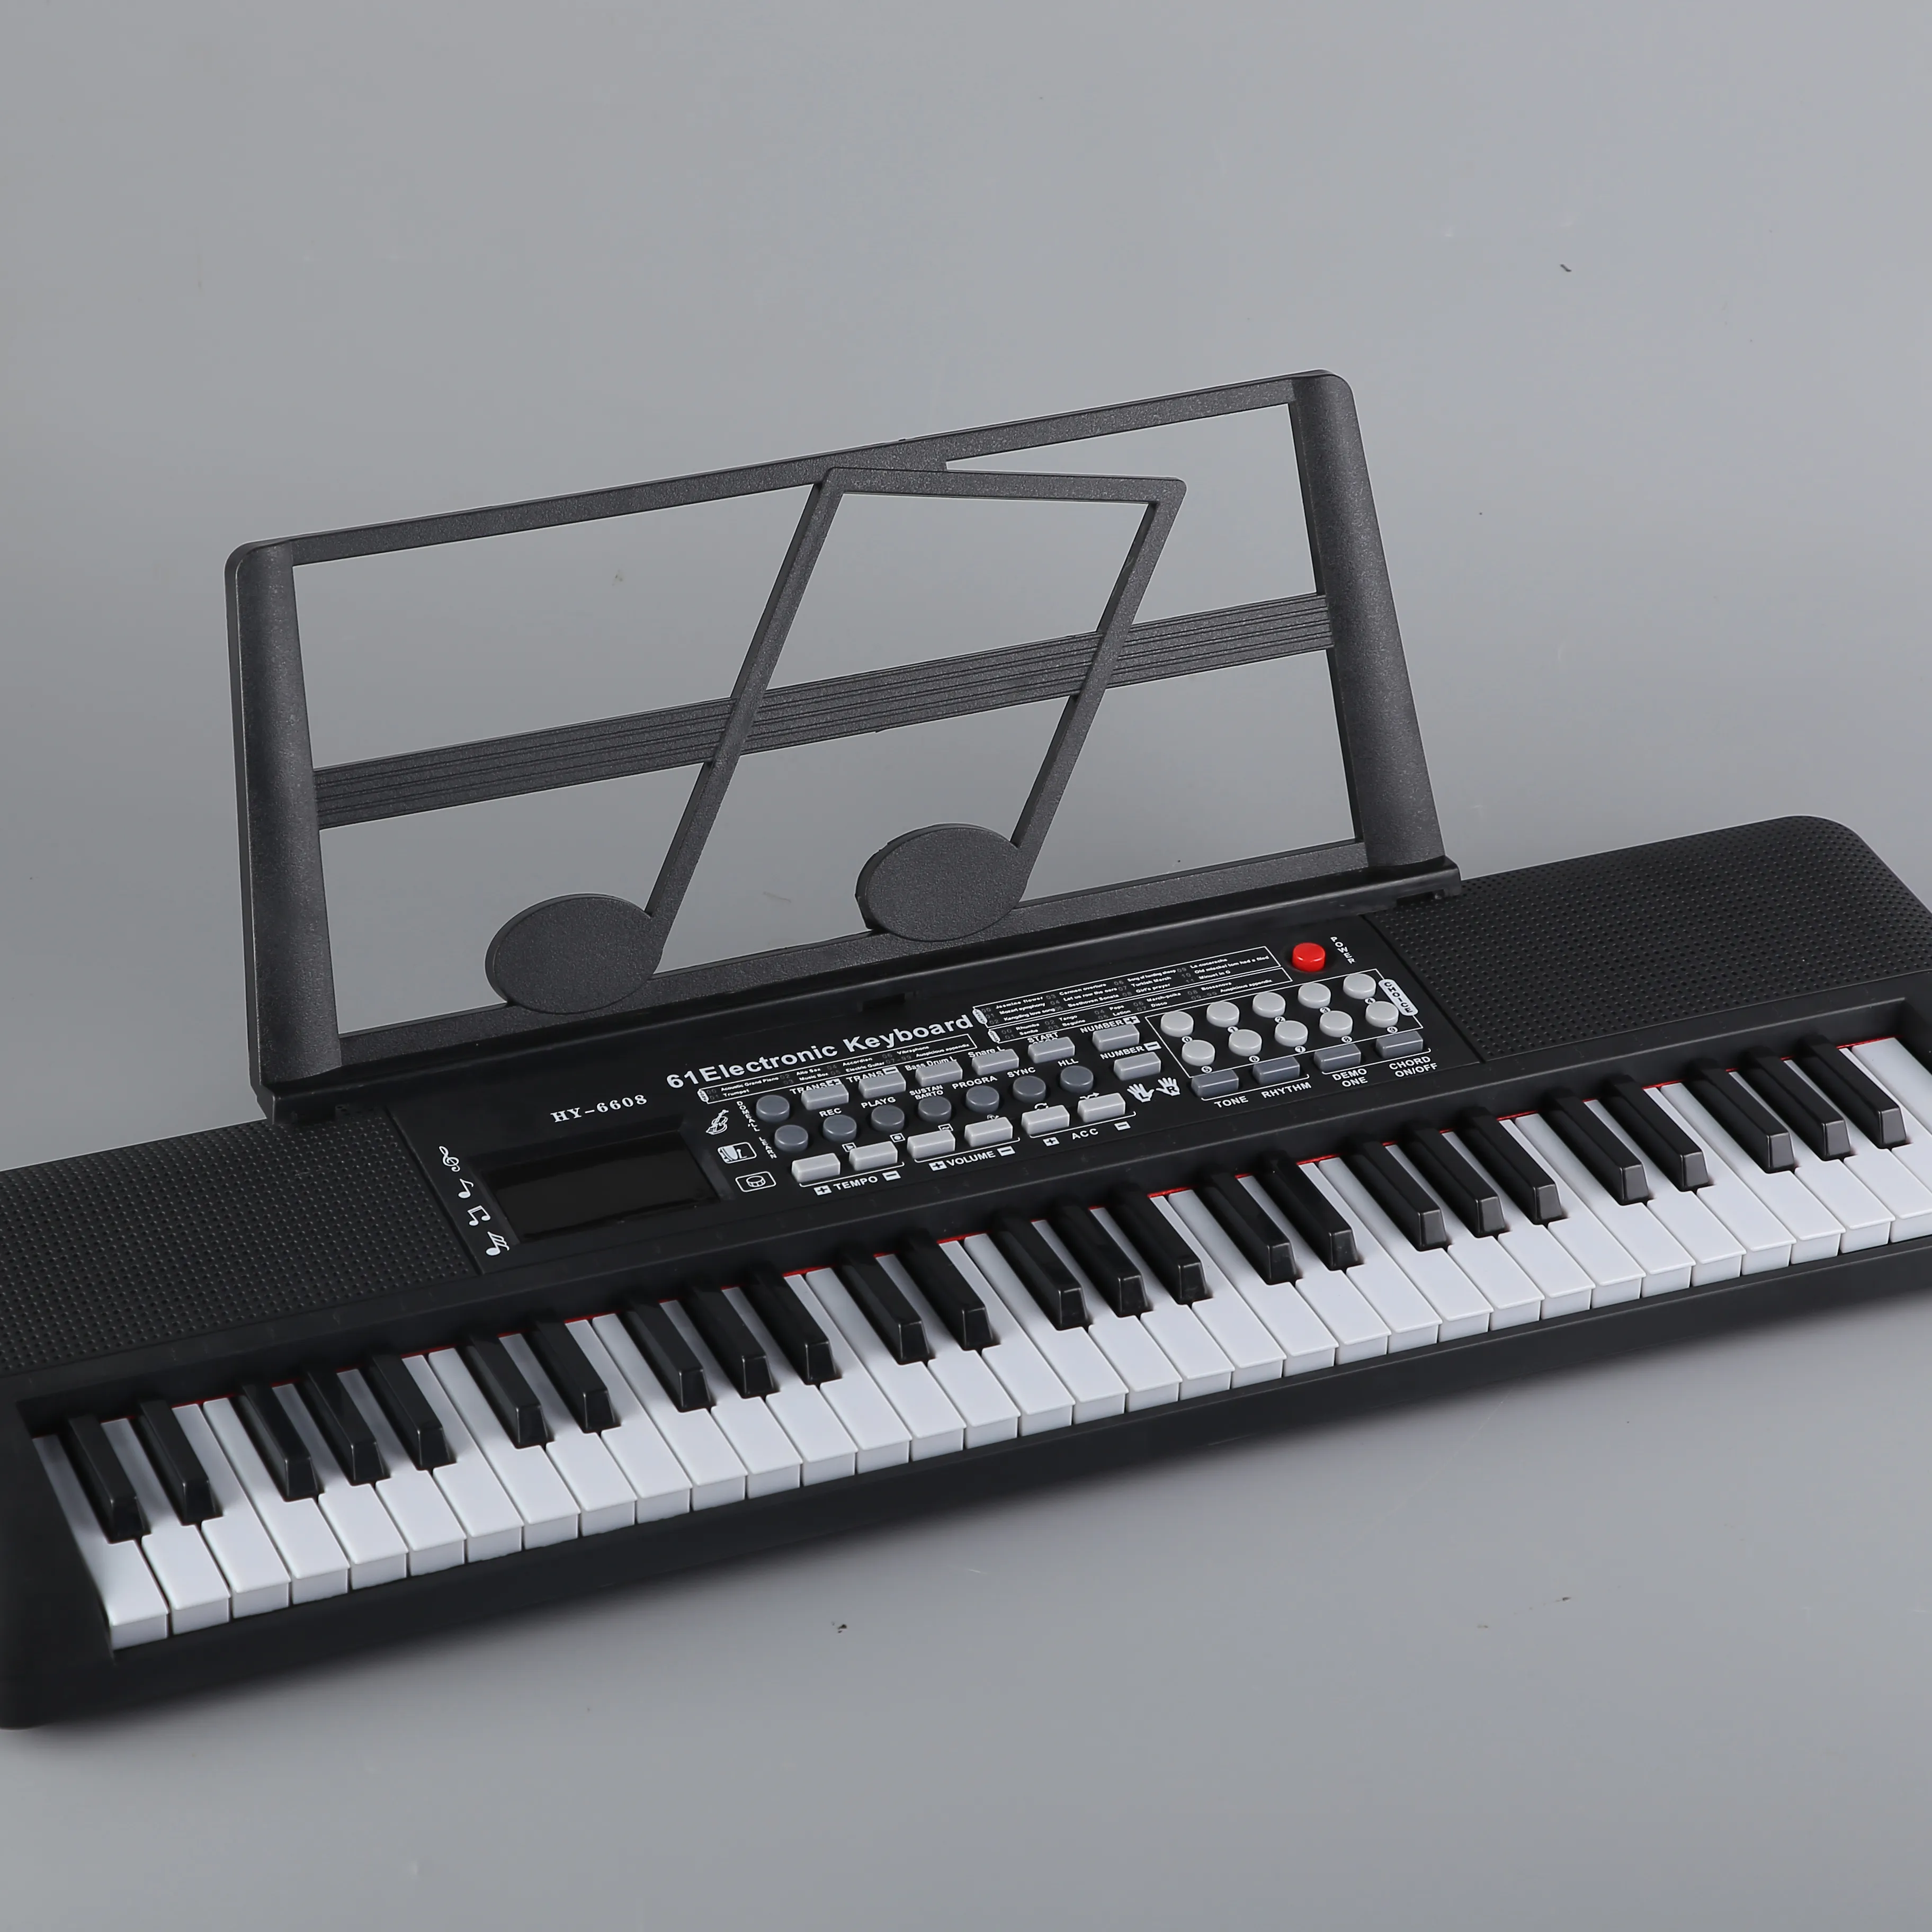 Alat Musik Harga Murah Keyboard Organ Digital Keyboard 61 Tuts Piano Keyboard Sentuh